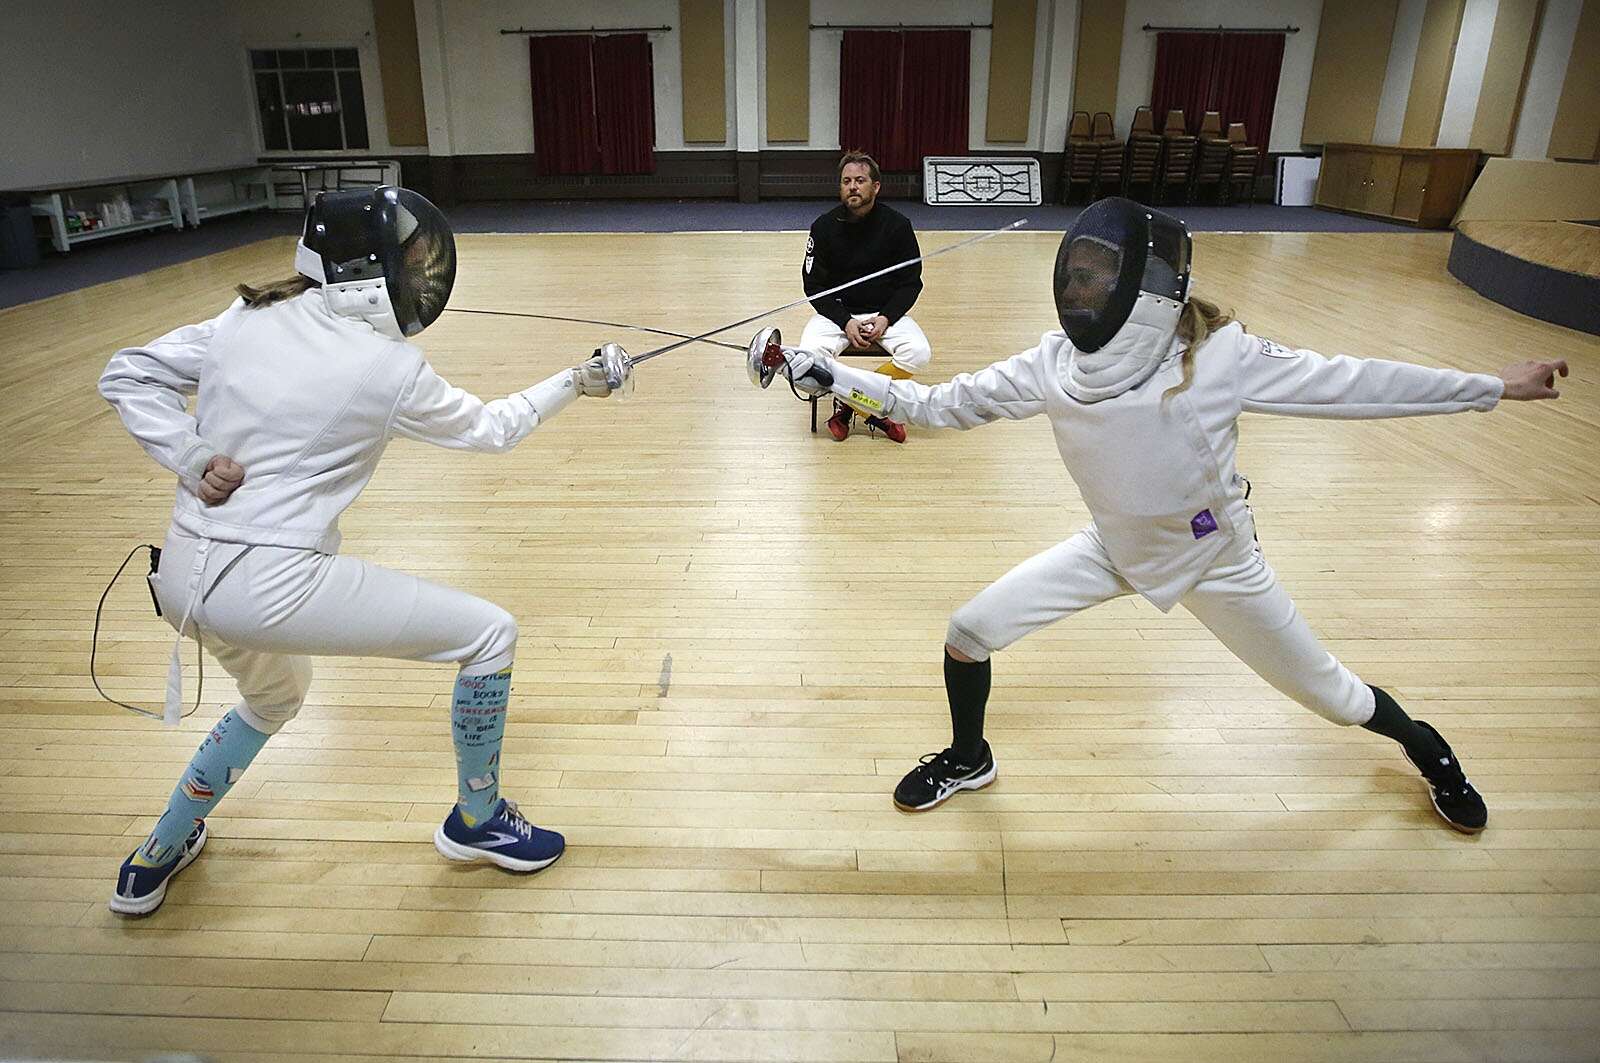 Four Corners Fencing Club seeks new members, equipment to keep dueling –  The Durango Herald